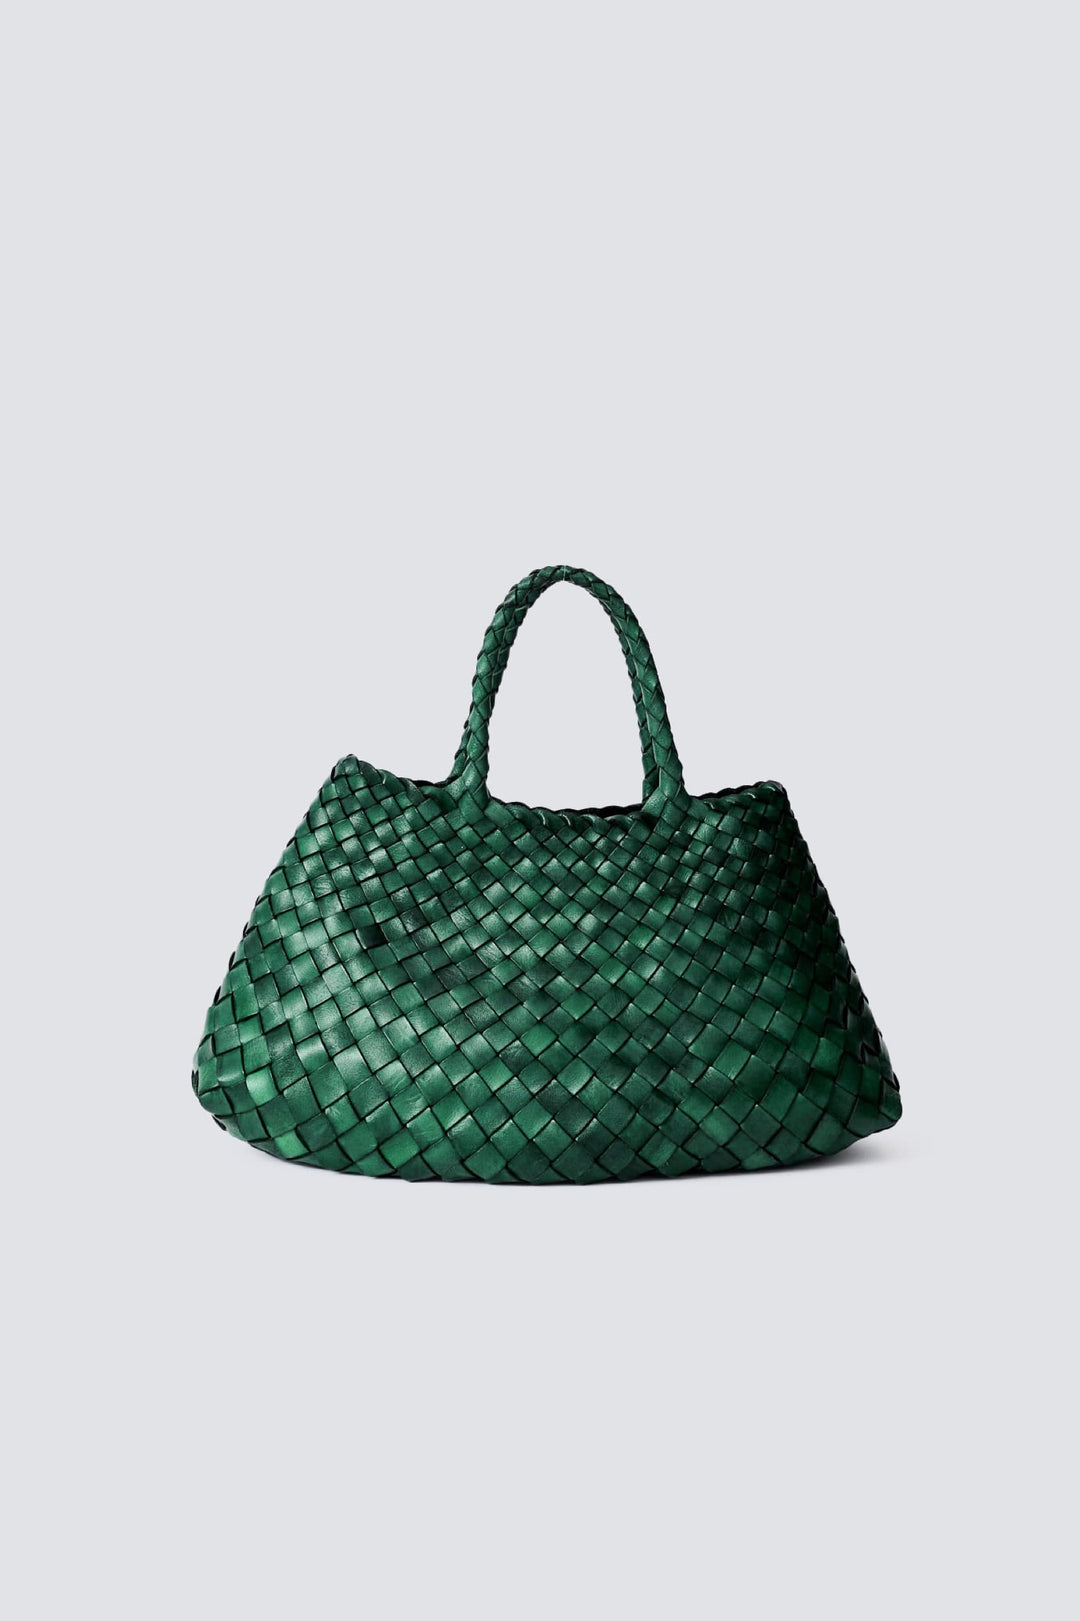 Small Green Bag